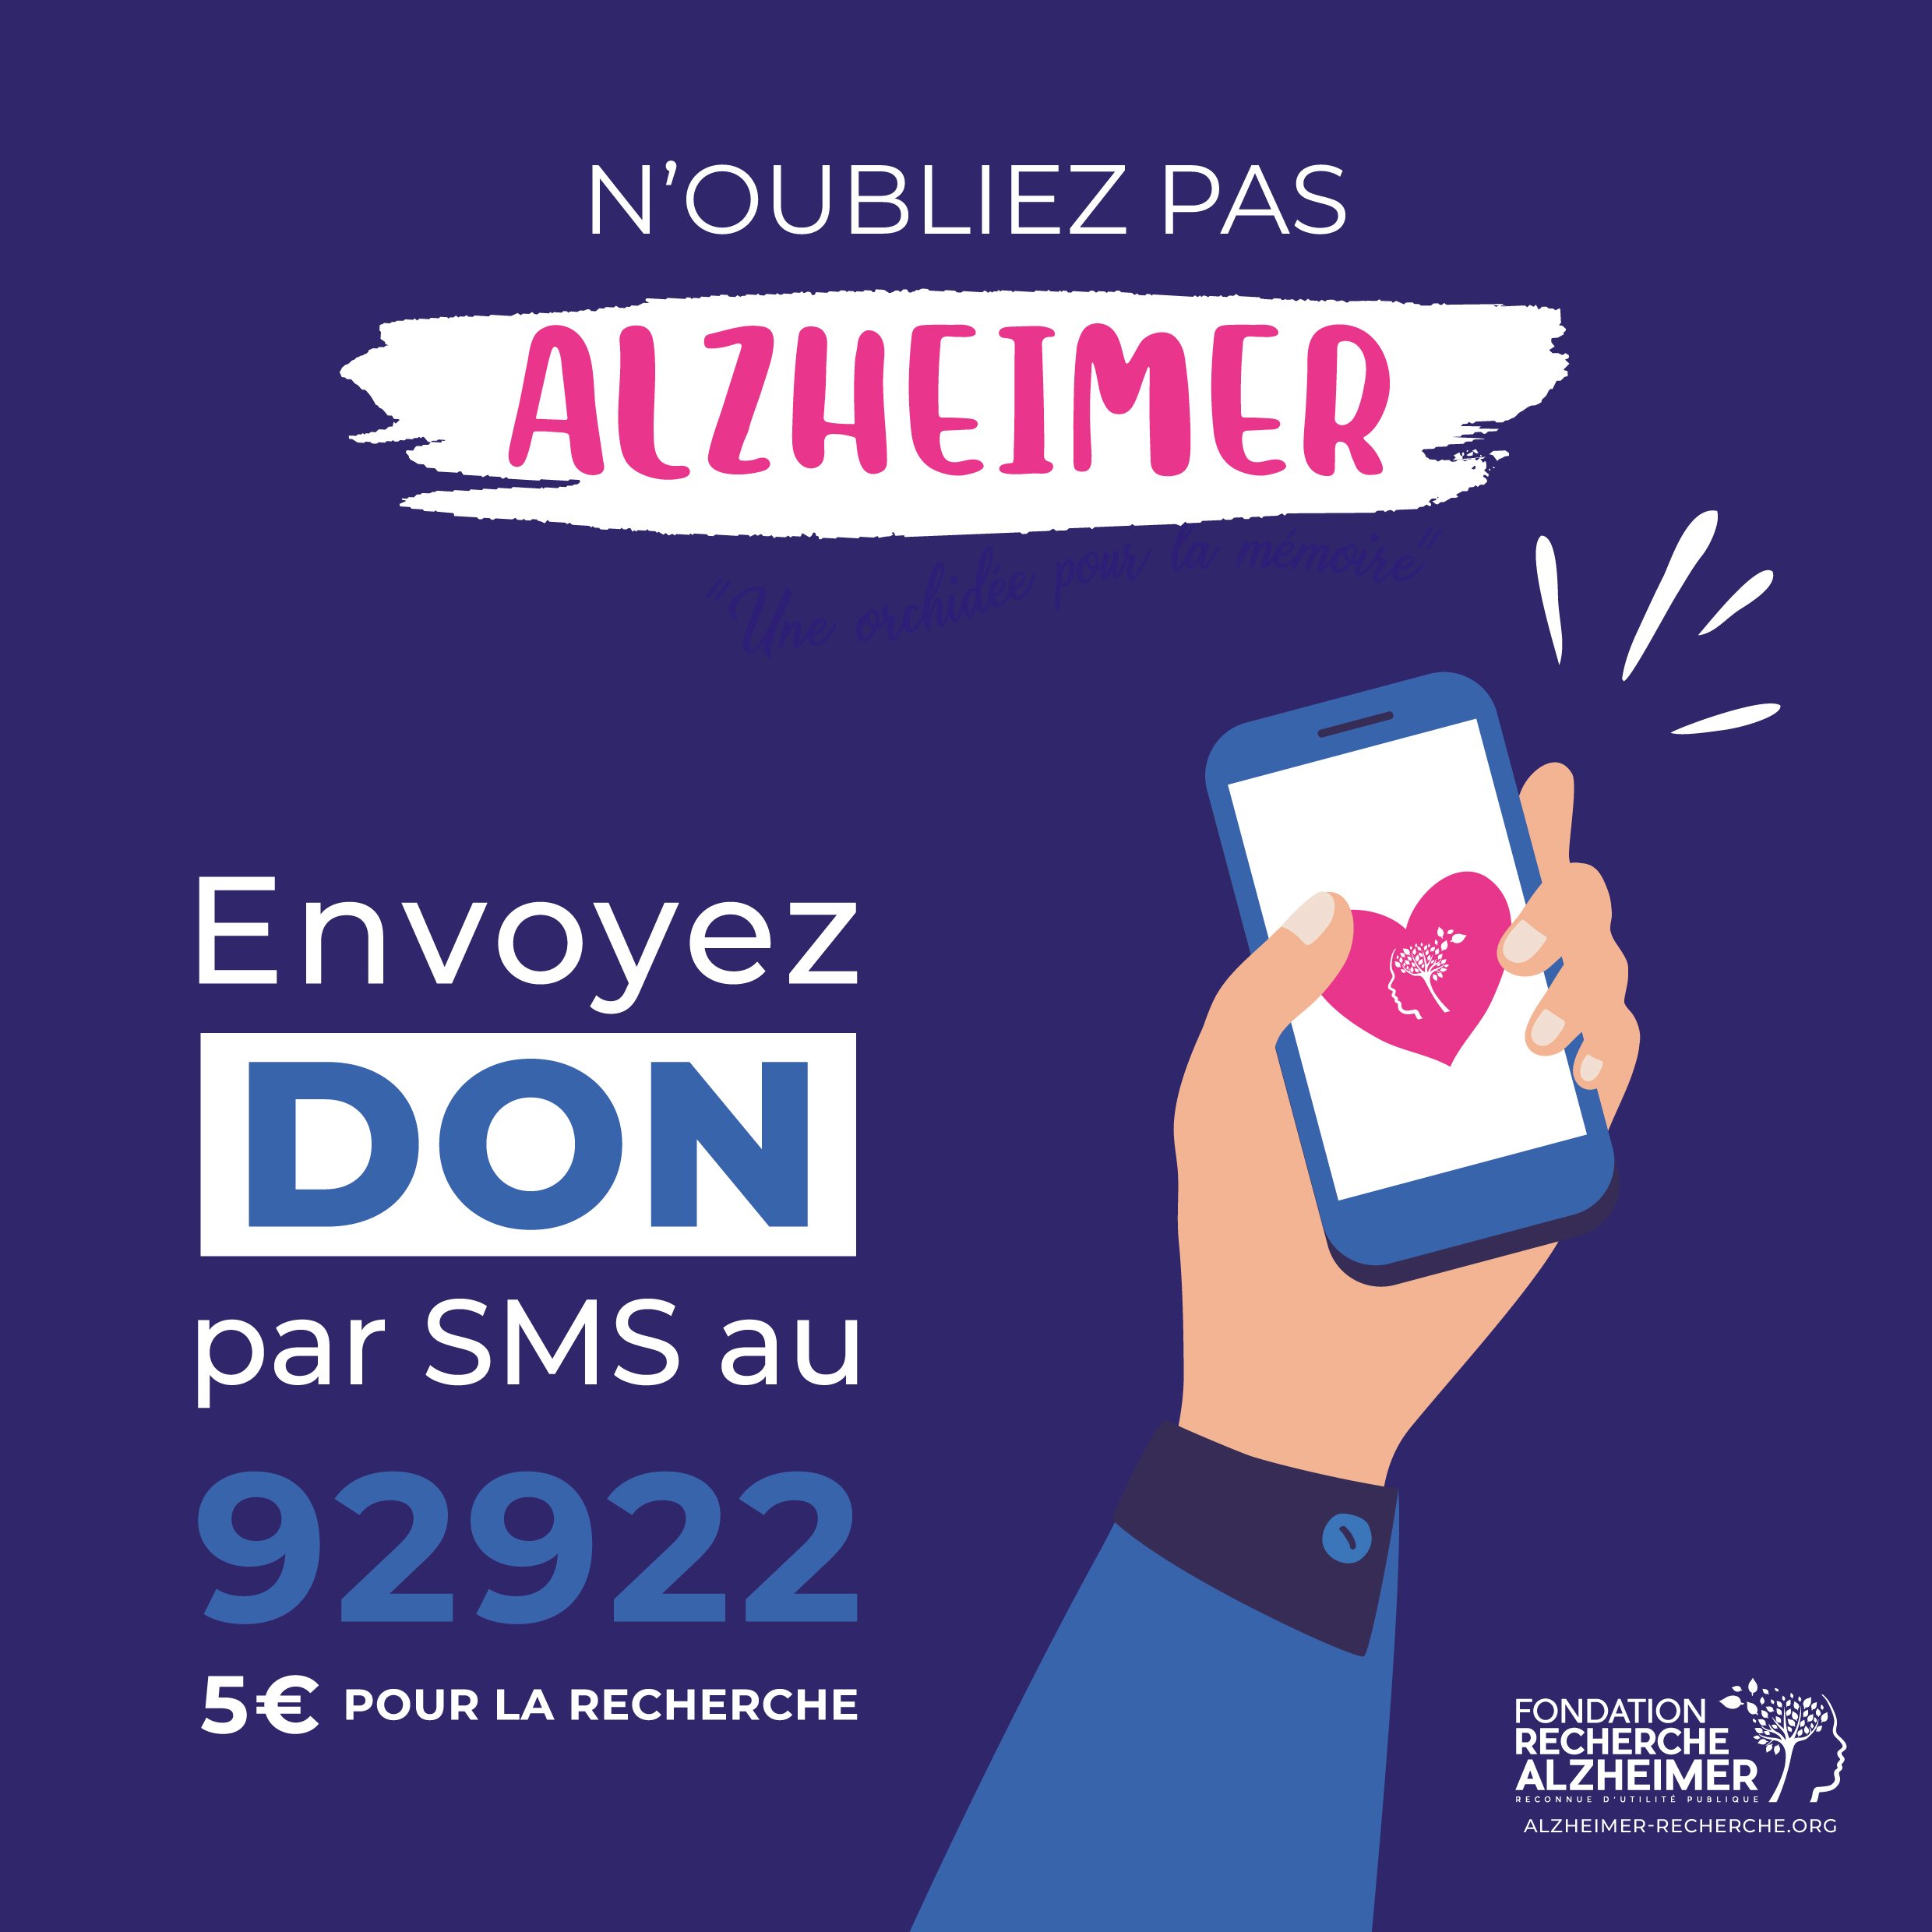 Soutenir la Fondation Recherche Alzheimer